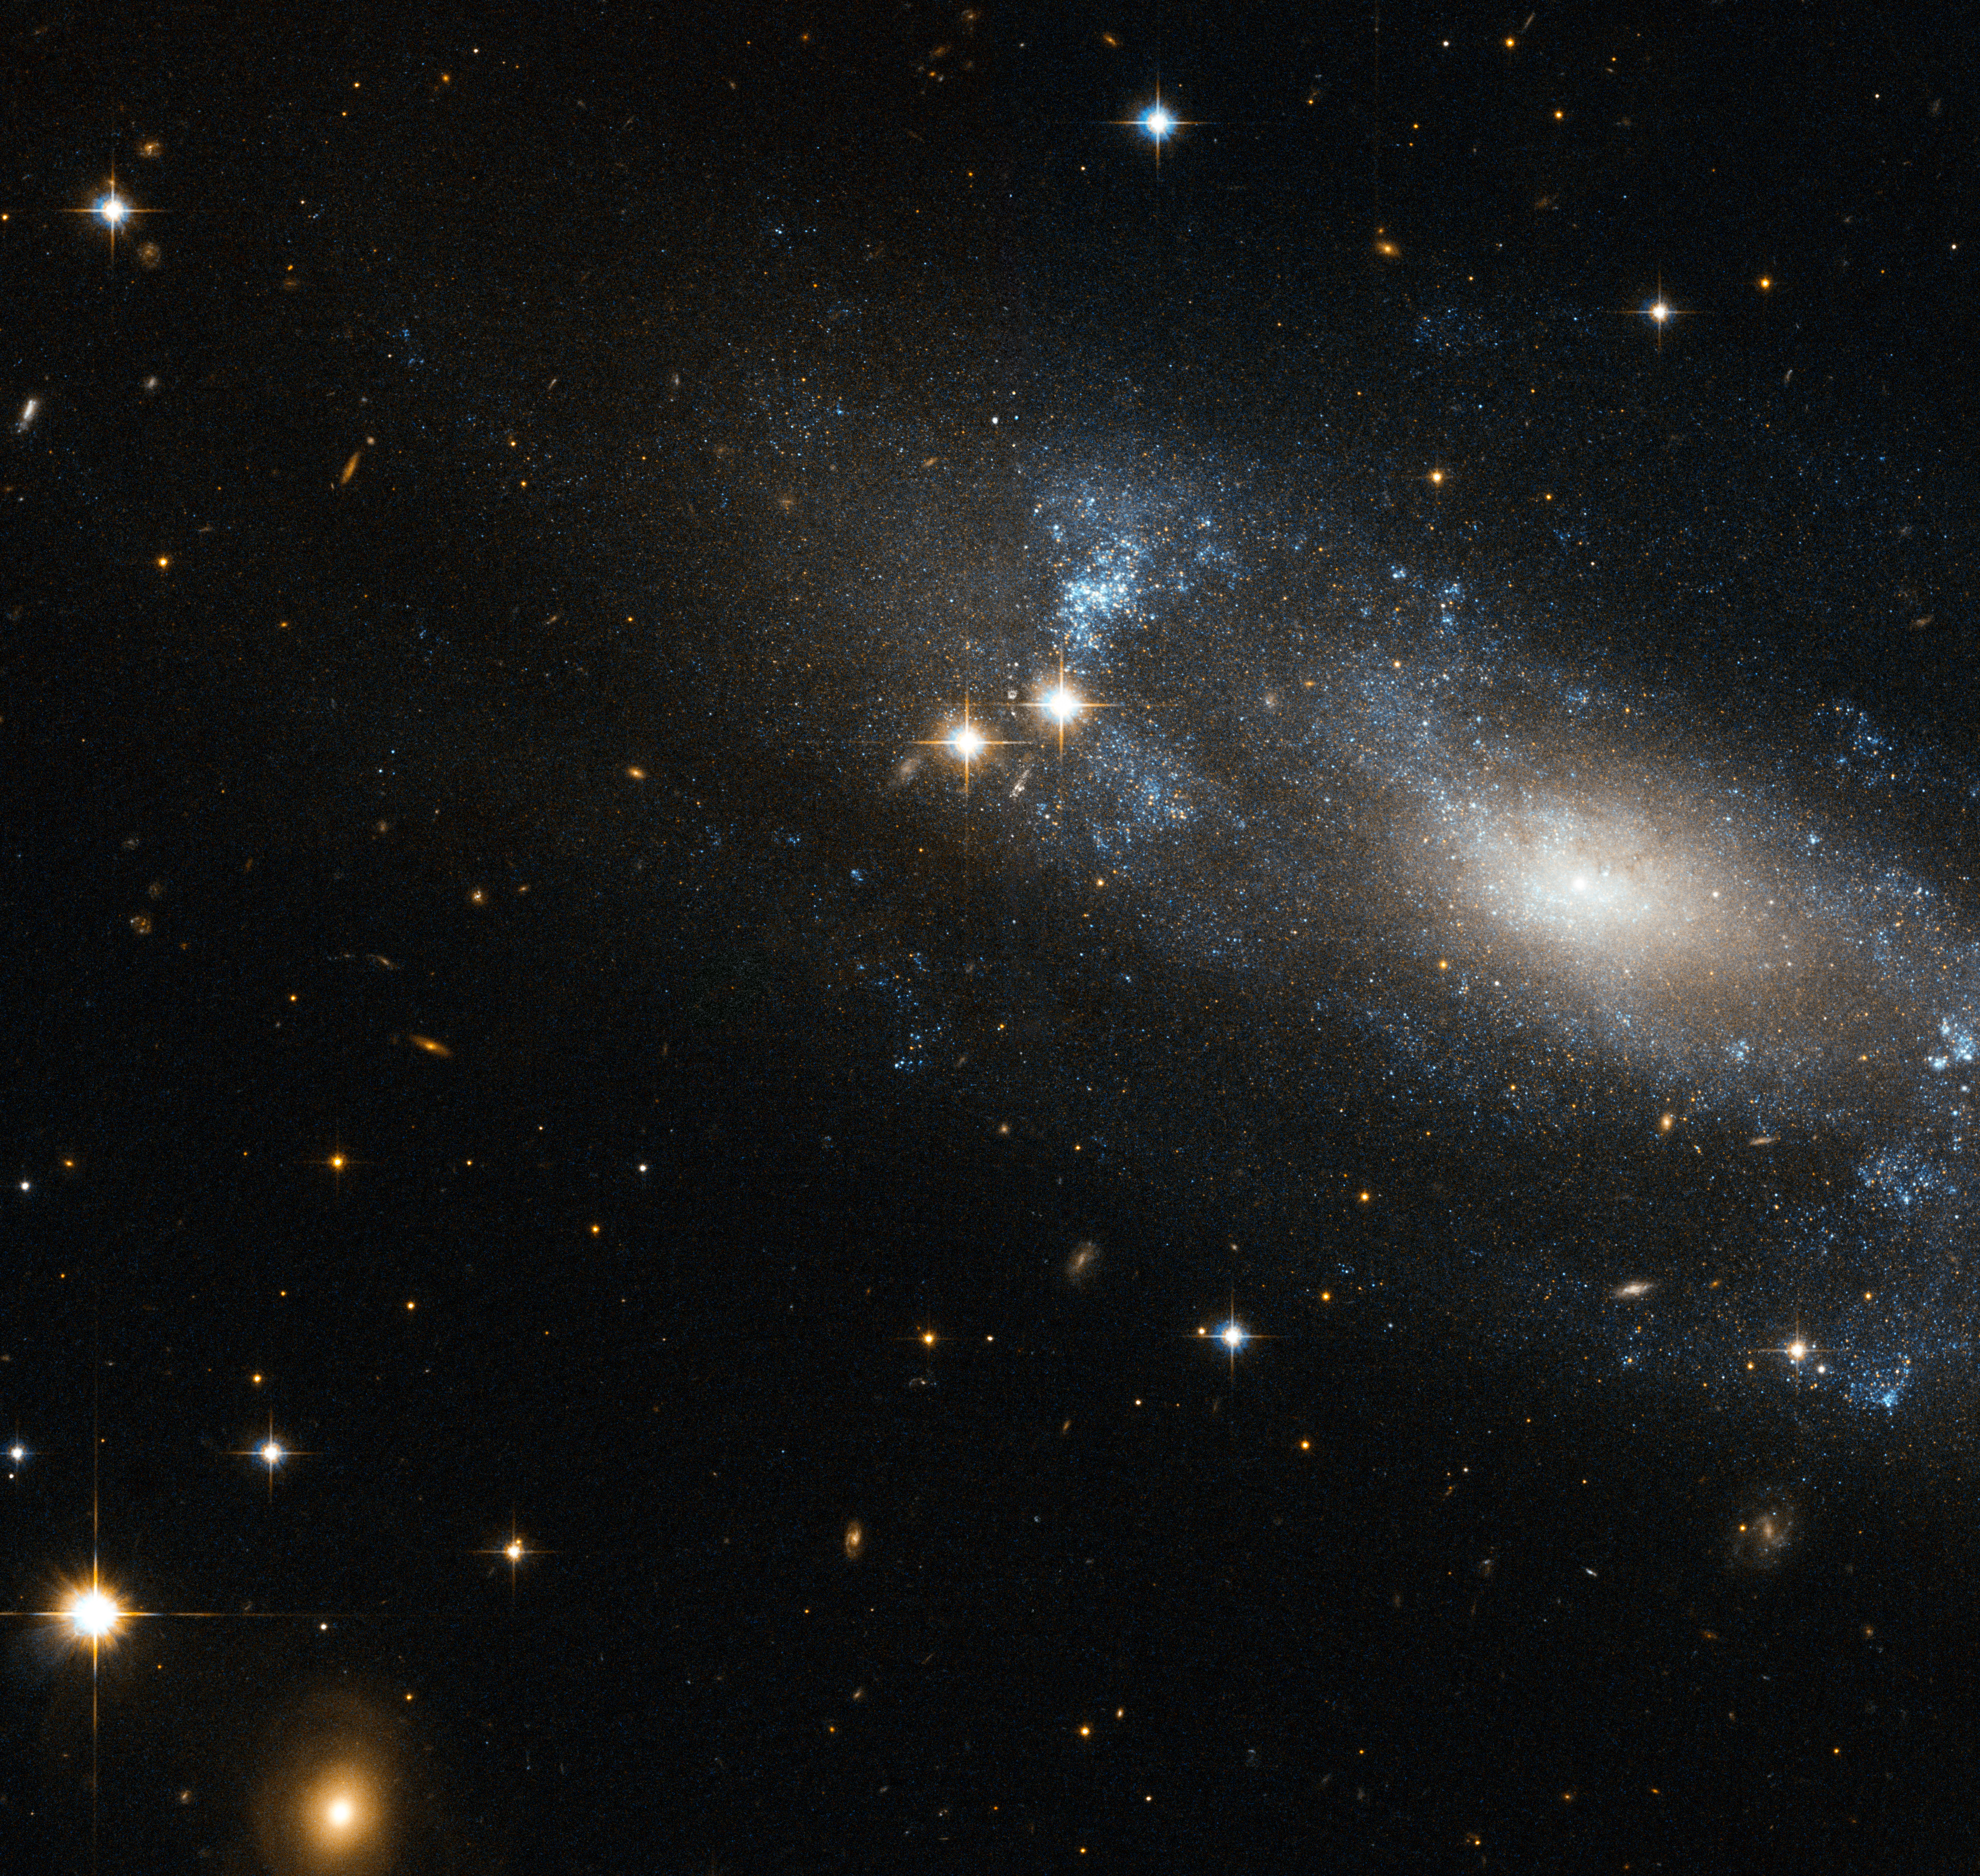 A loose spiral galaxy